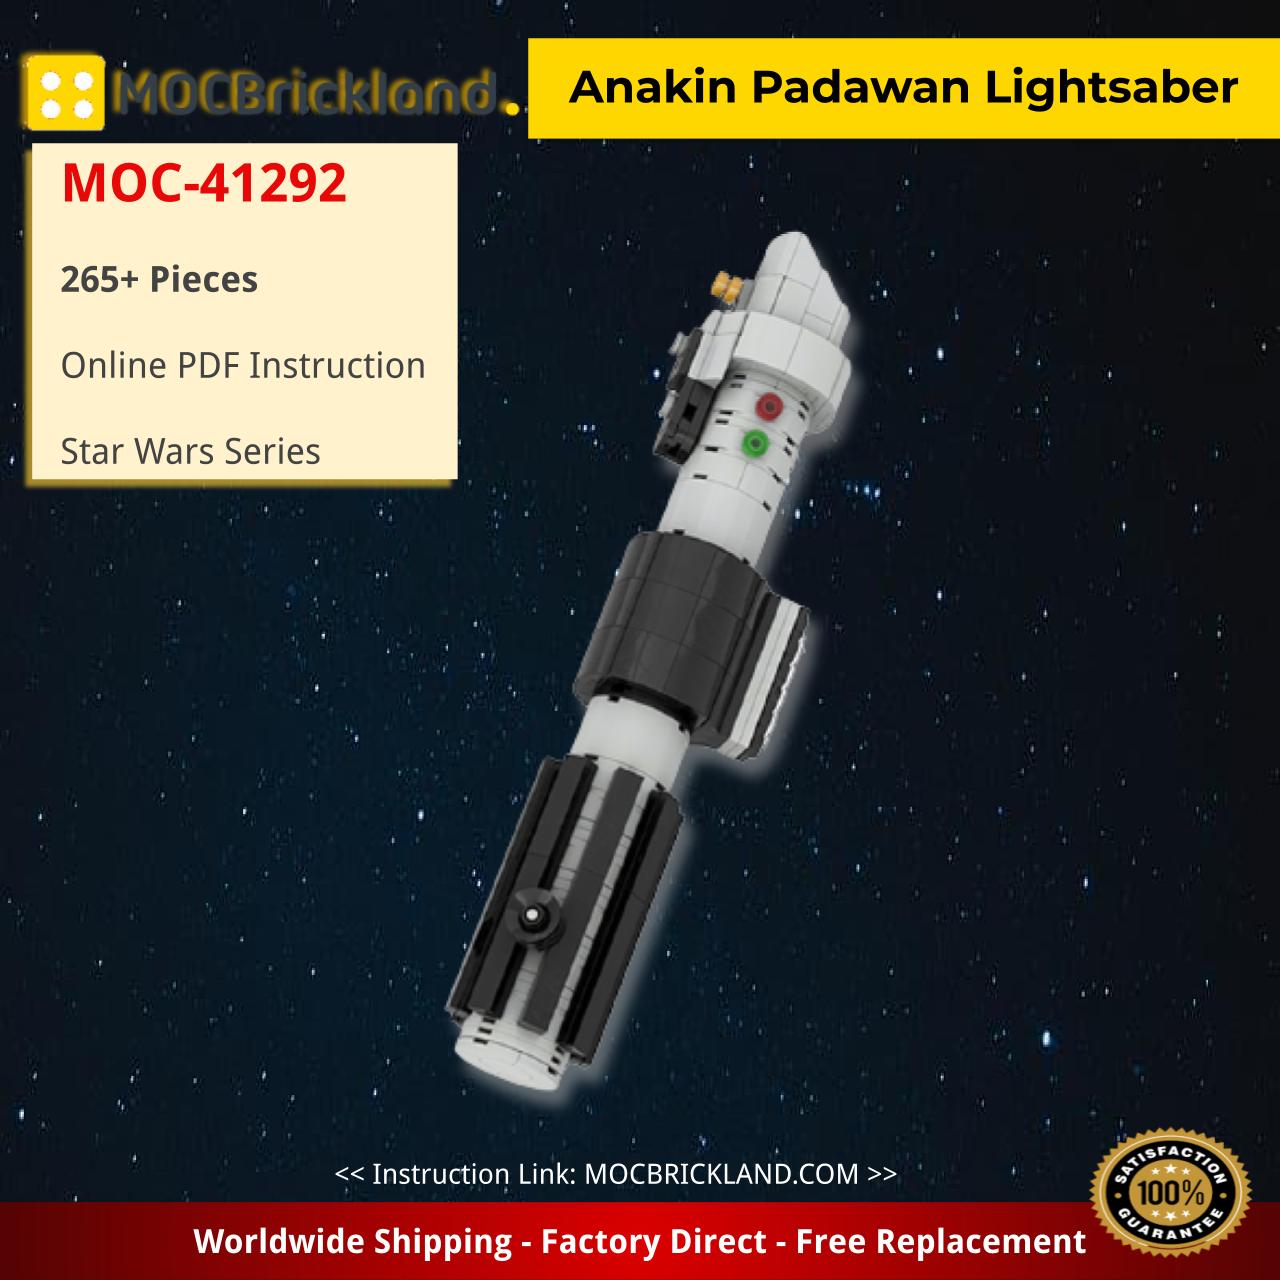 Anakin Padawan Lightsaber Star Wars MOC-41292 by built_bricks with 265 pieces